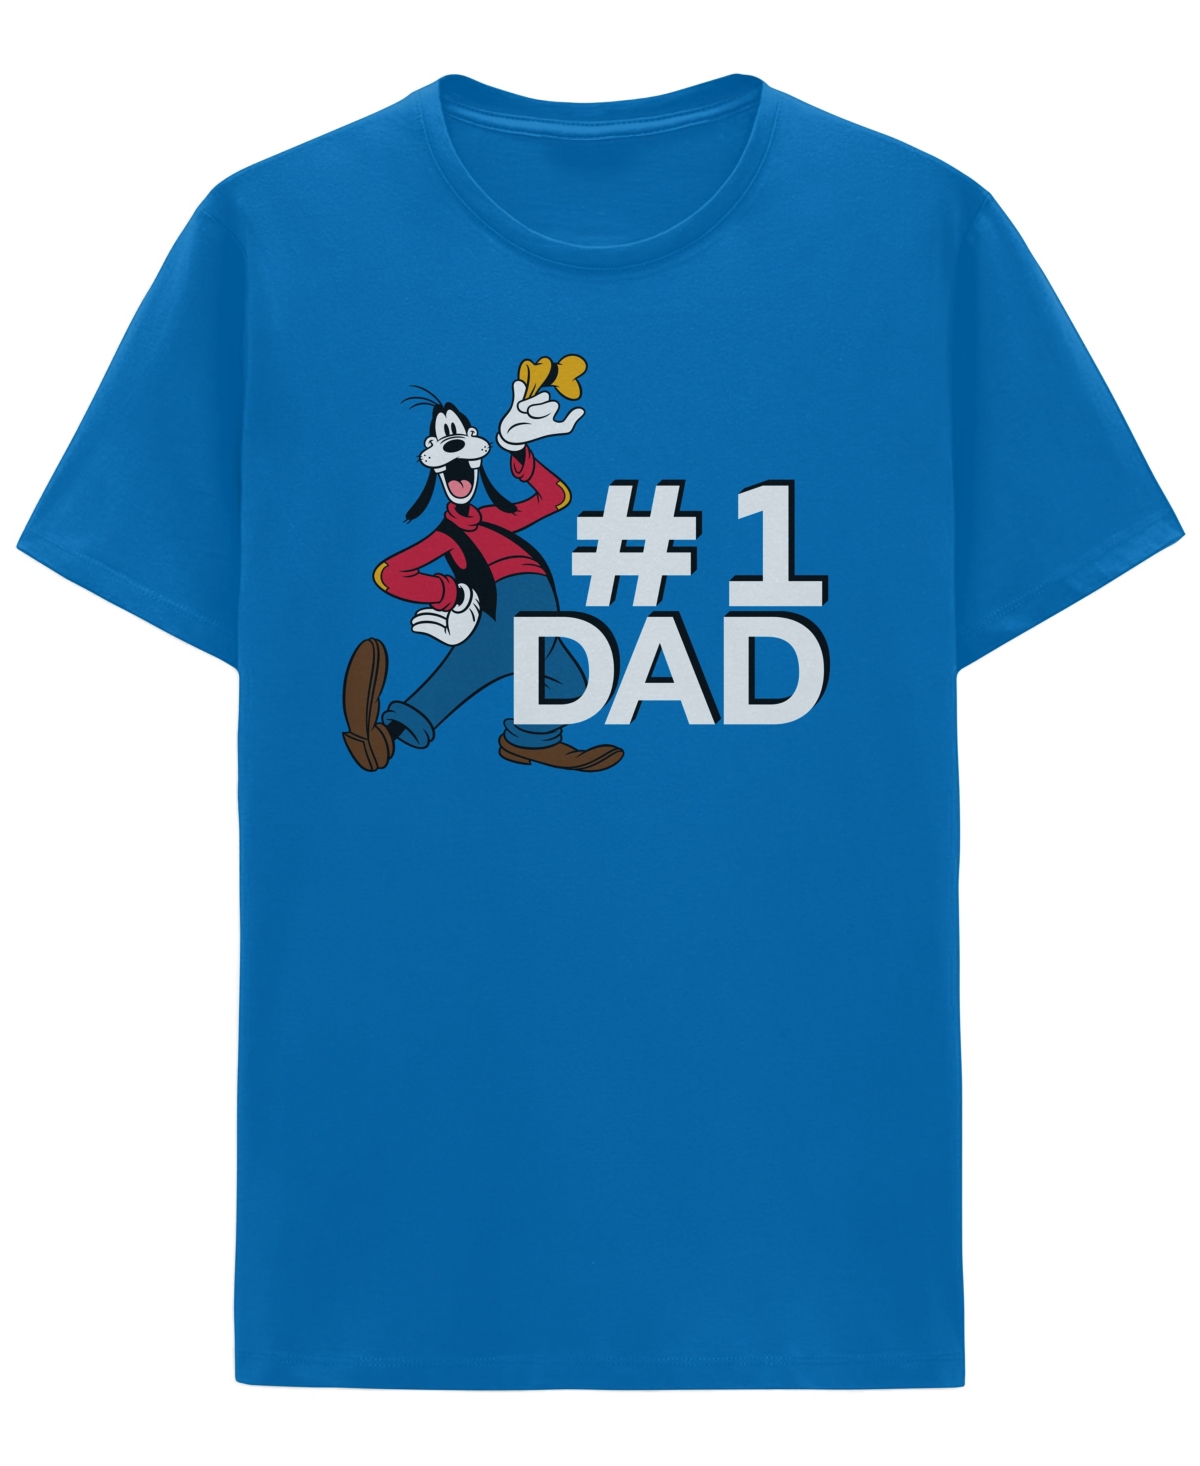 Men's Goofy Dad Short Sleeves T-shirt - Royal Blue